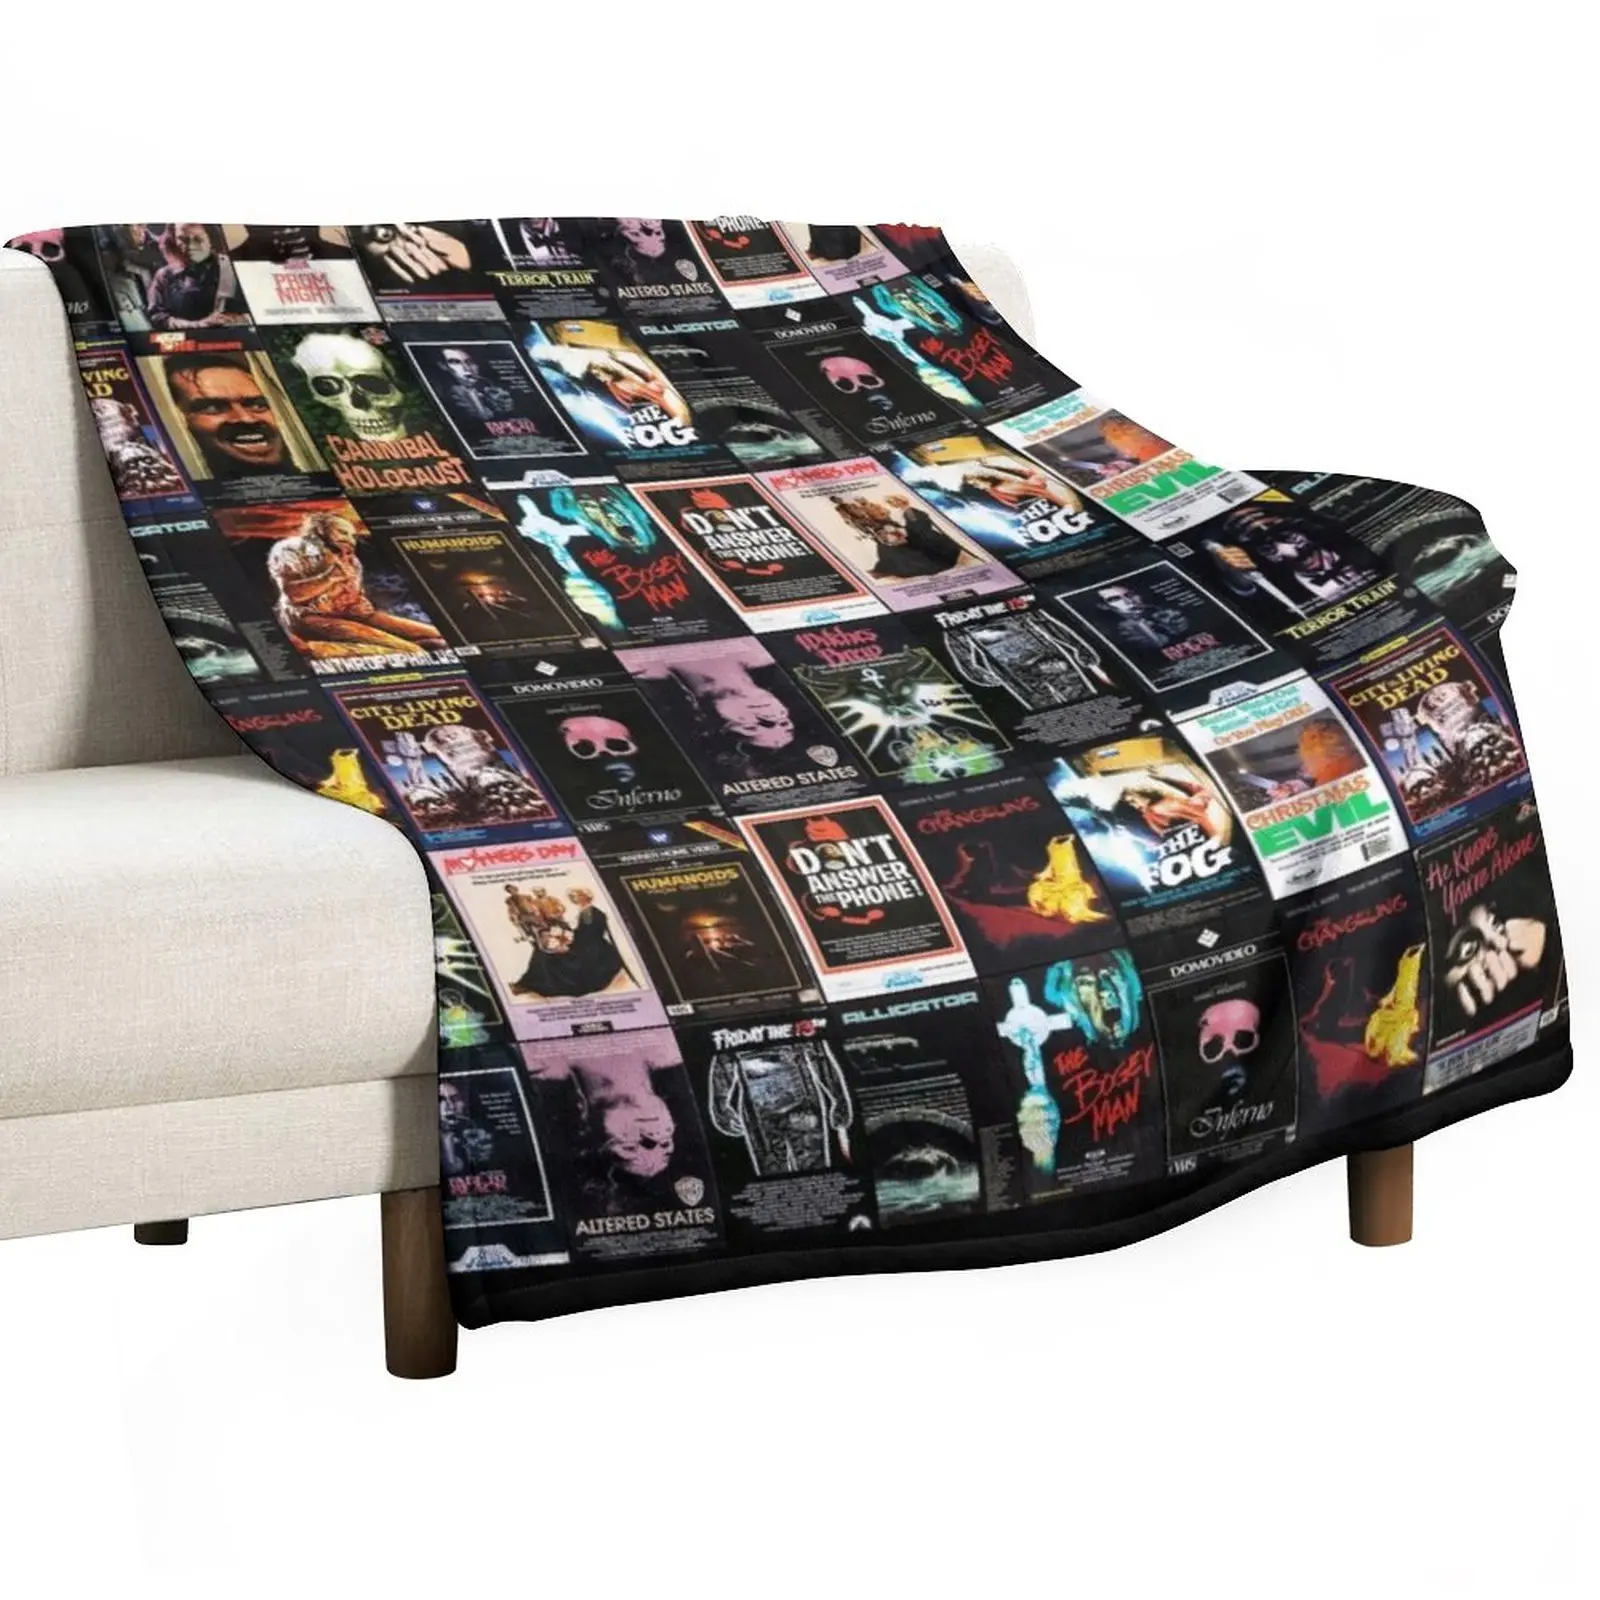 

RETRO HORROR VHS ARTWORK - 1980 Throw Blanket Decorative Bed Blankets valentine gift ideas Blanket For Sofa